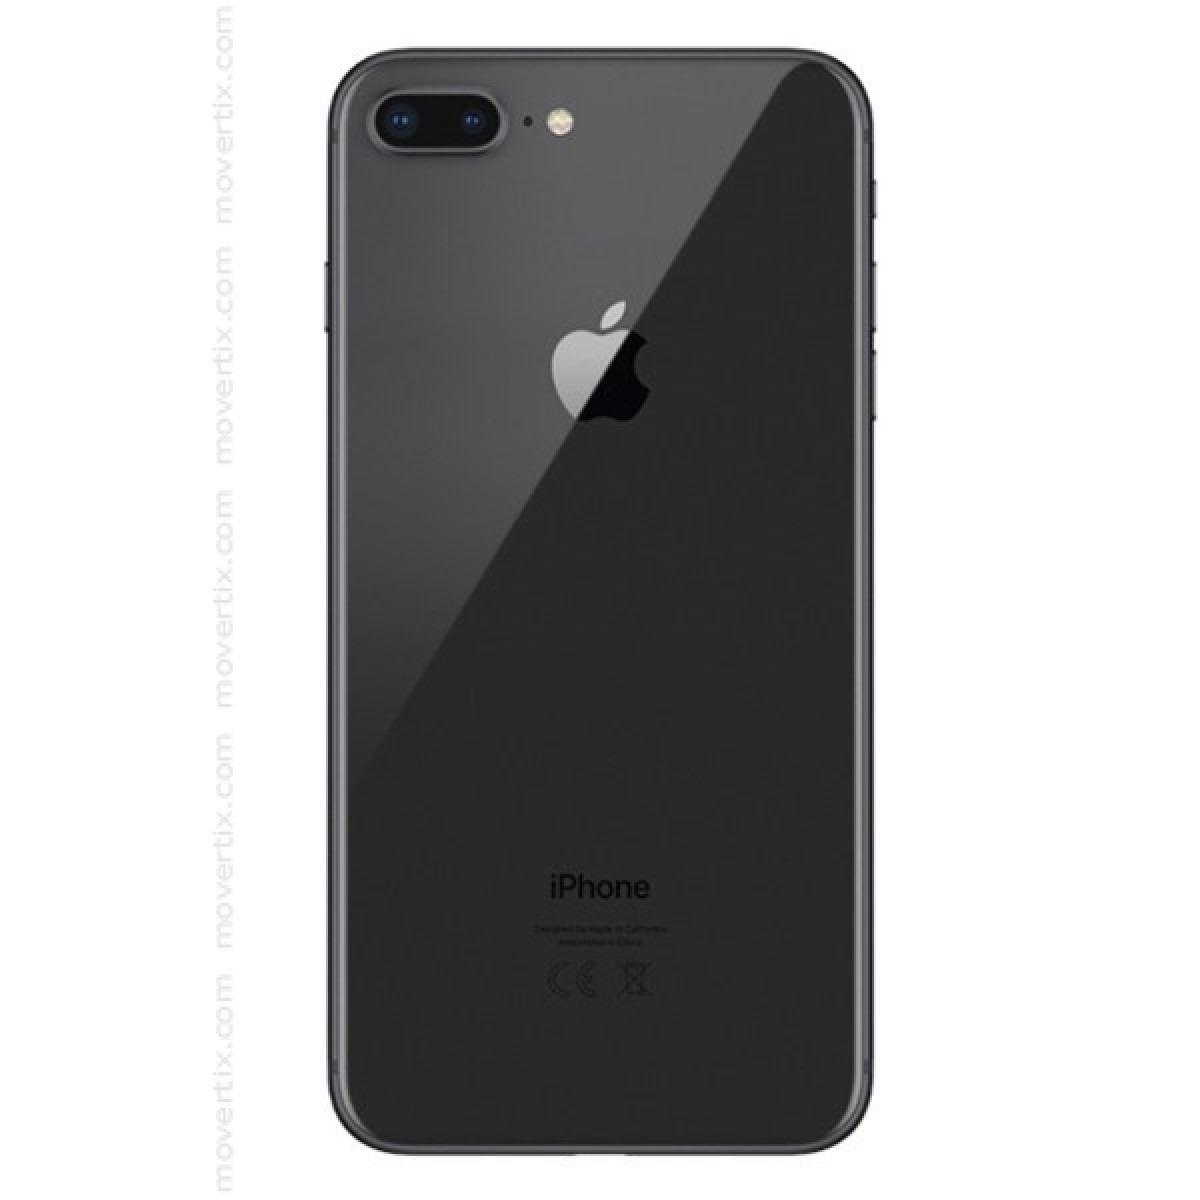 iPhone 8 Plus Space Grey 64GB (0190198454140) | Movertix Mobile Phones Shop